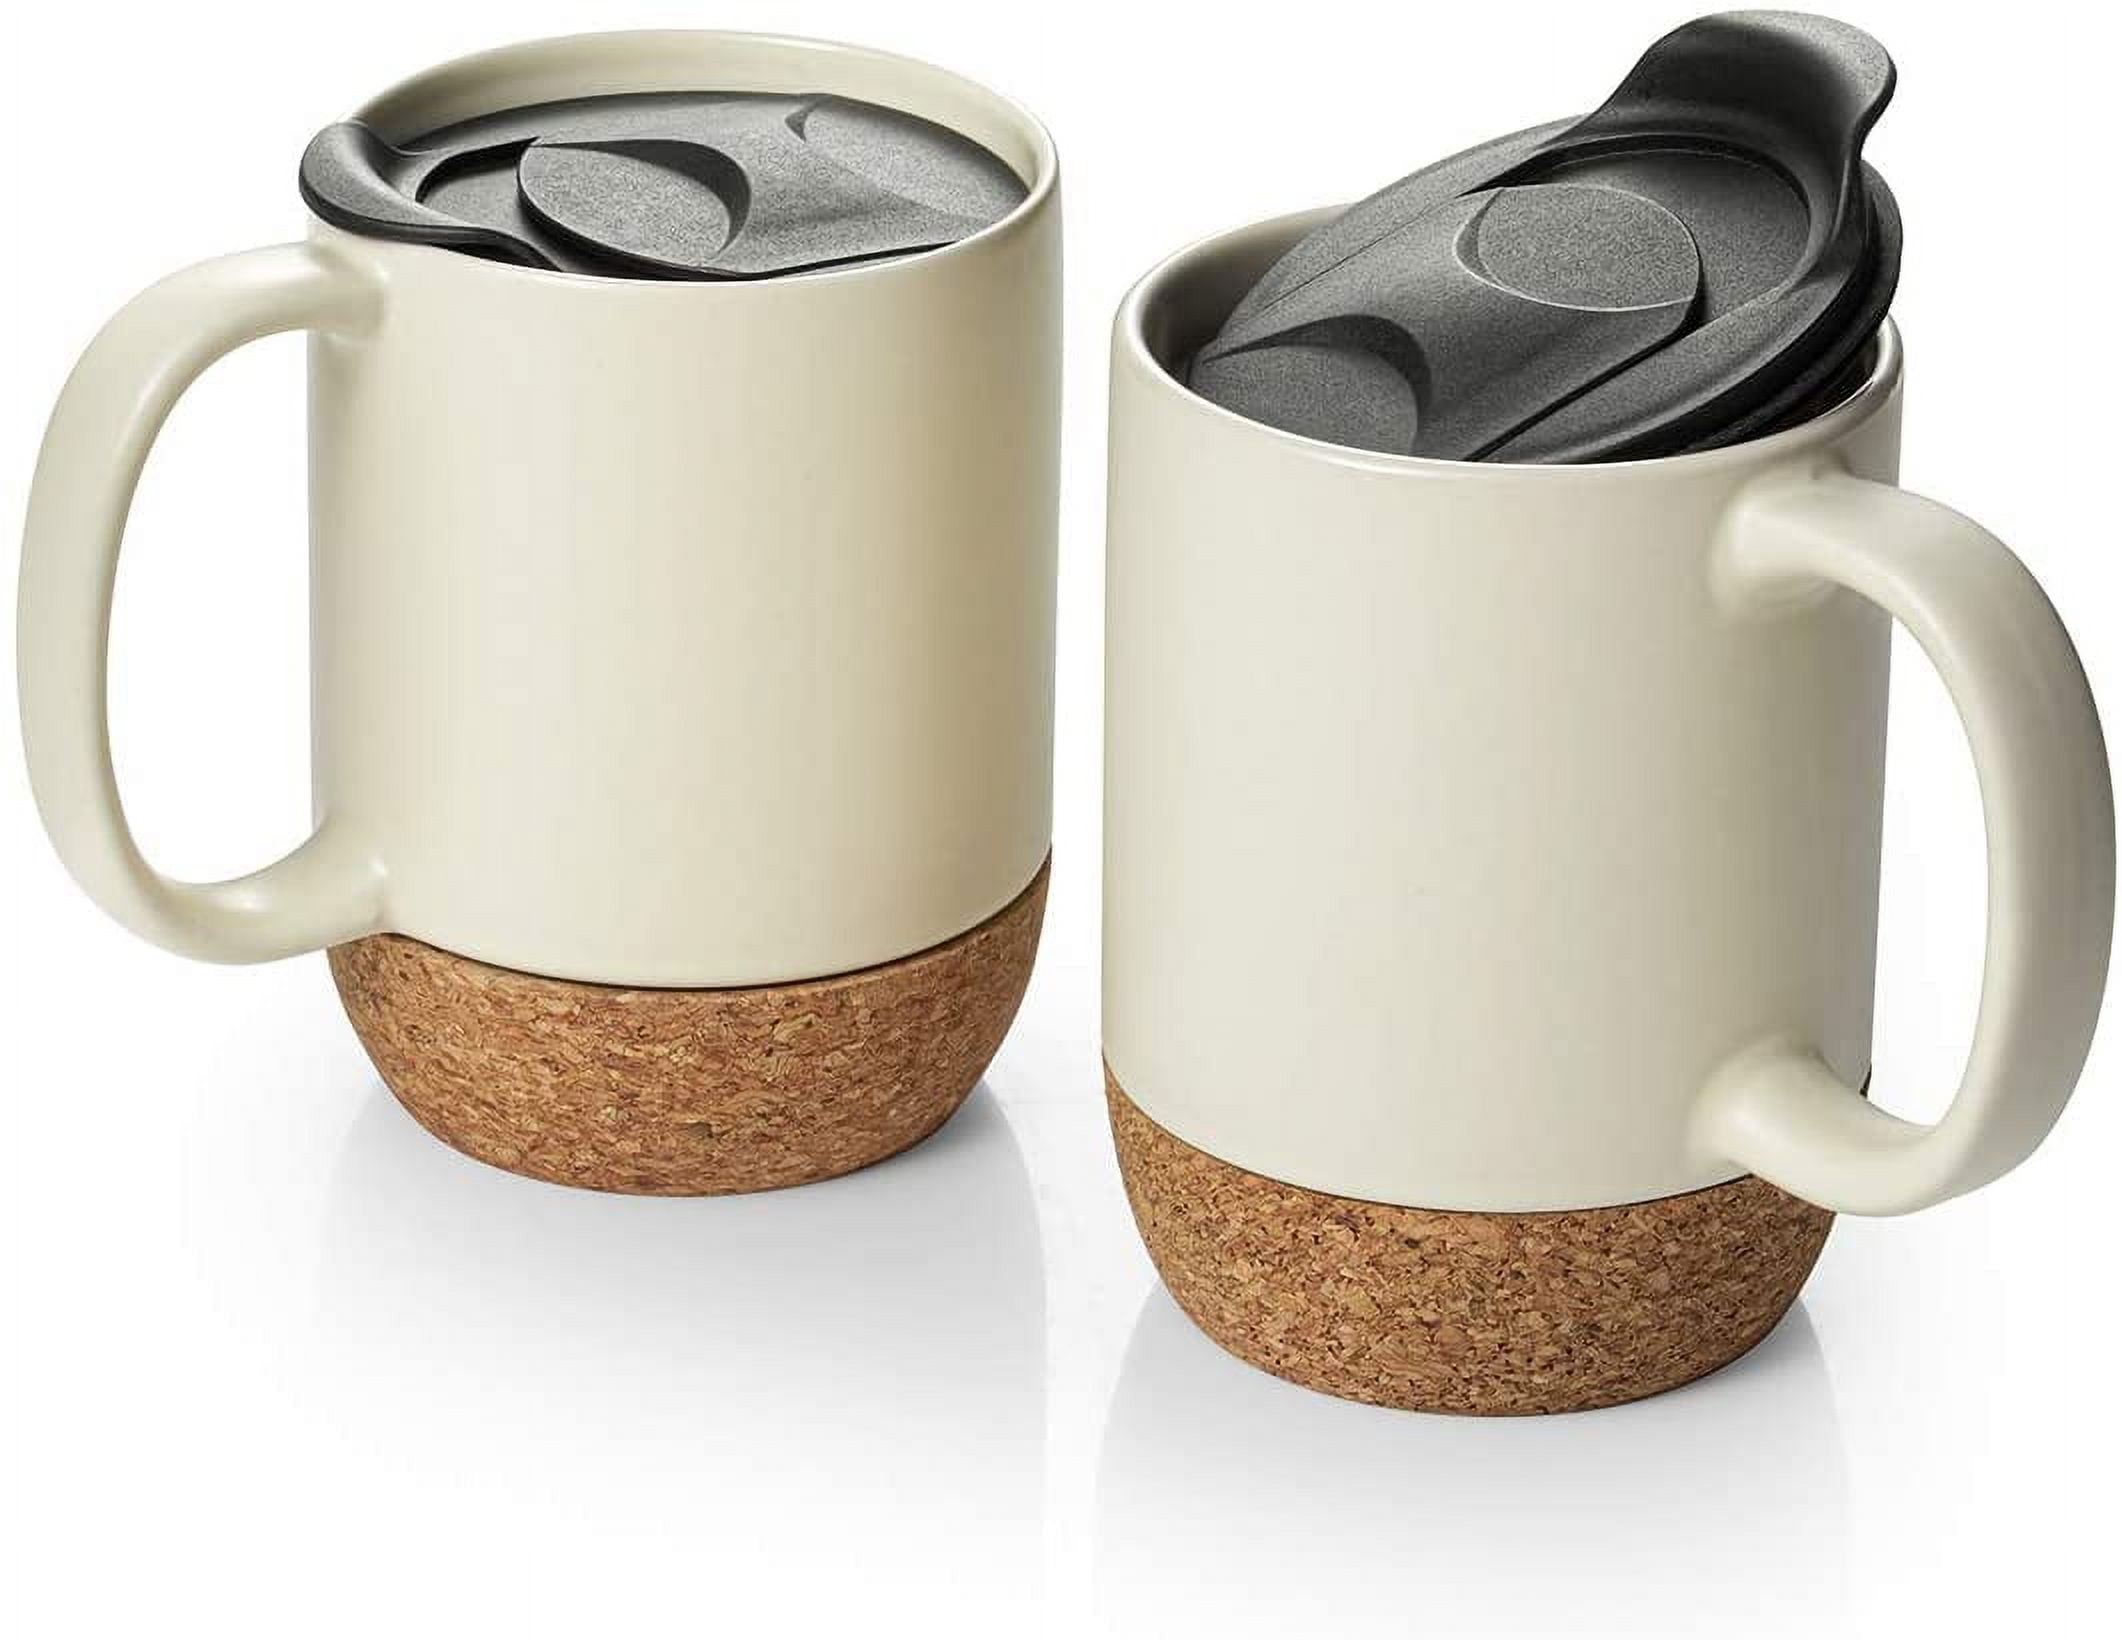 BYCNZB 30oz Super Large Ceramic Coffee Mugs Large Handles Set of 2 (Cream)